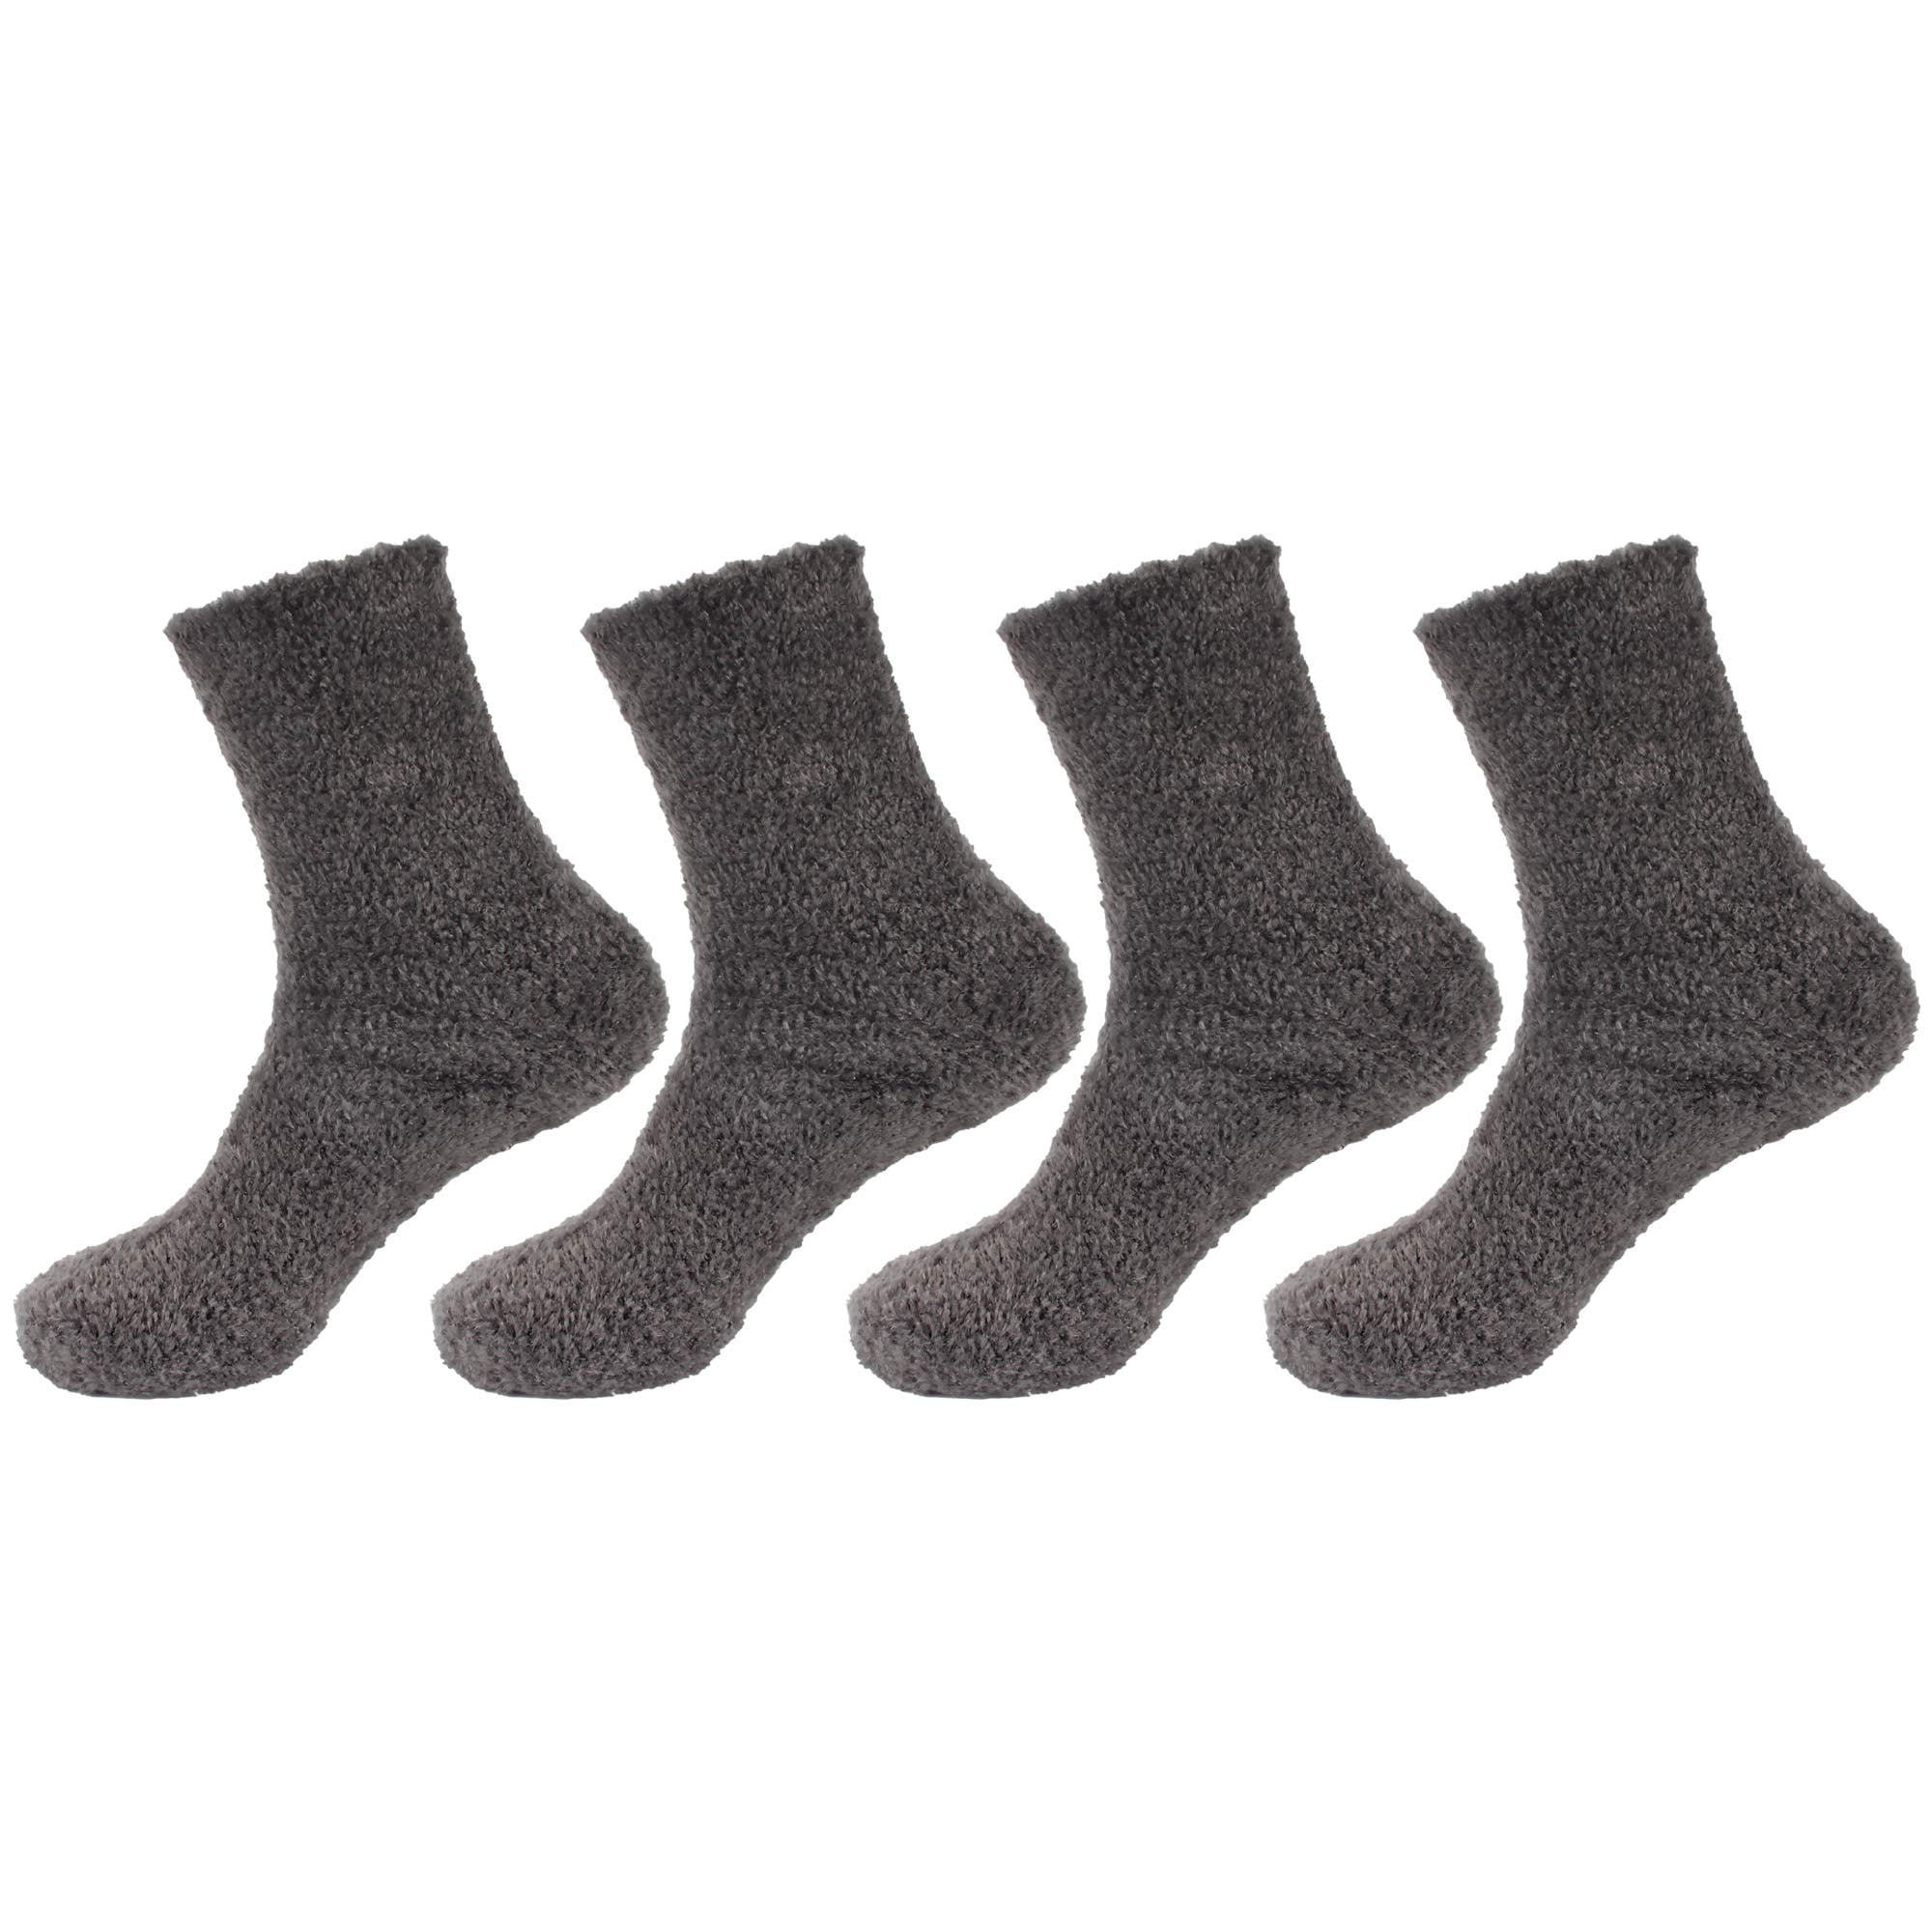 Dark Grey Fuzzy Socks with Grips for Men x2 Pairs